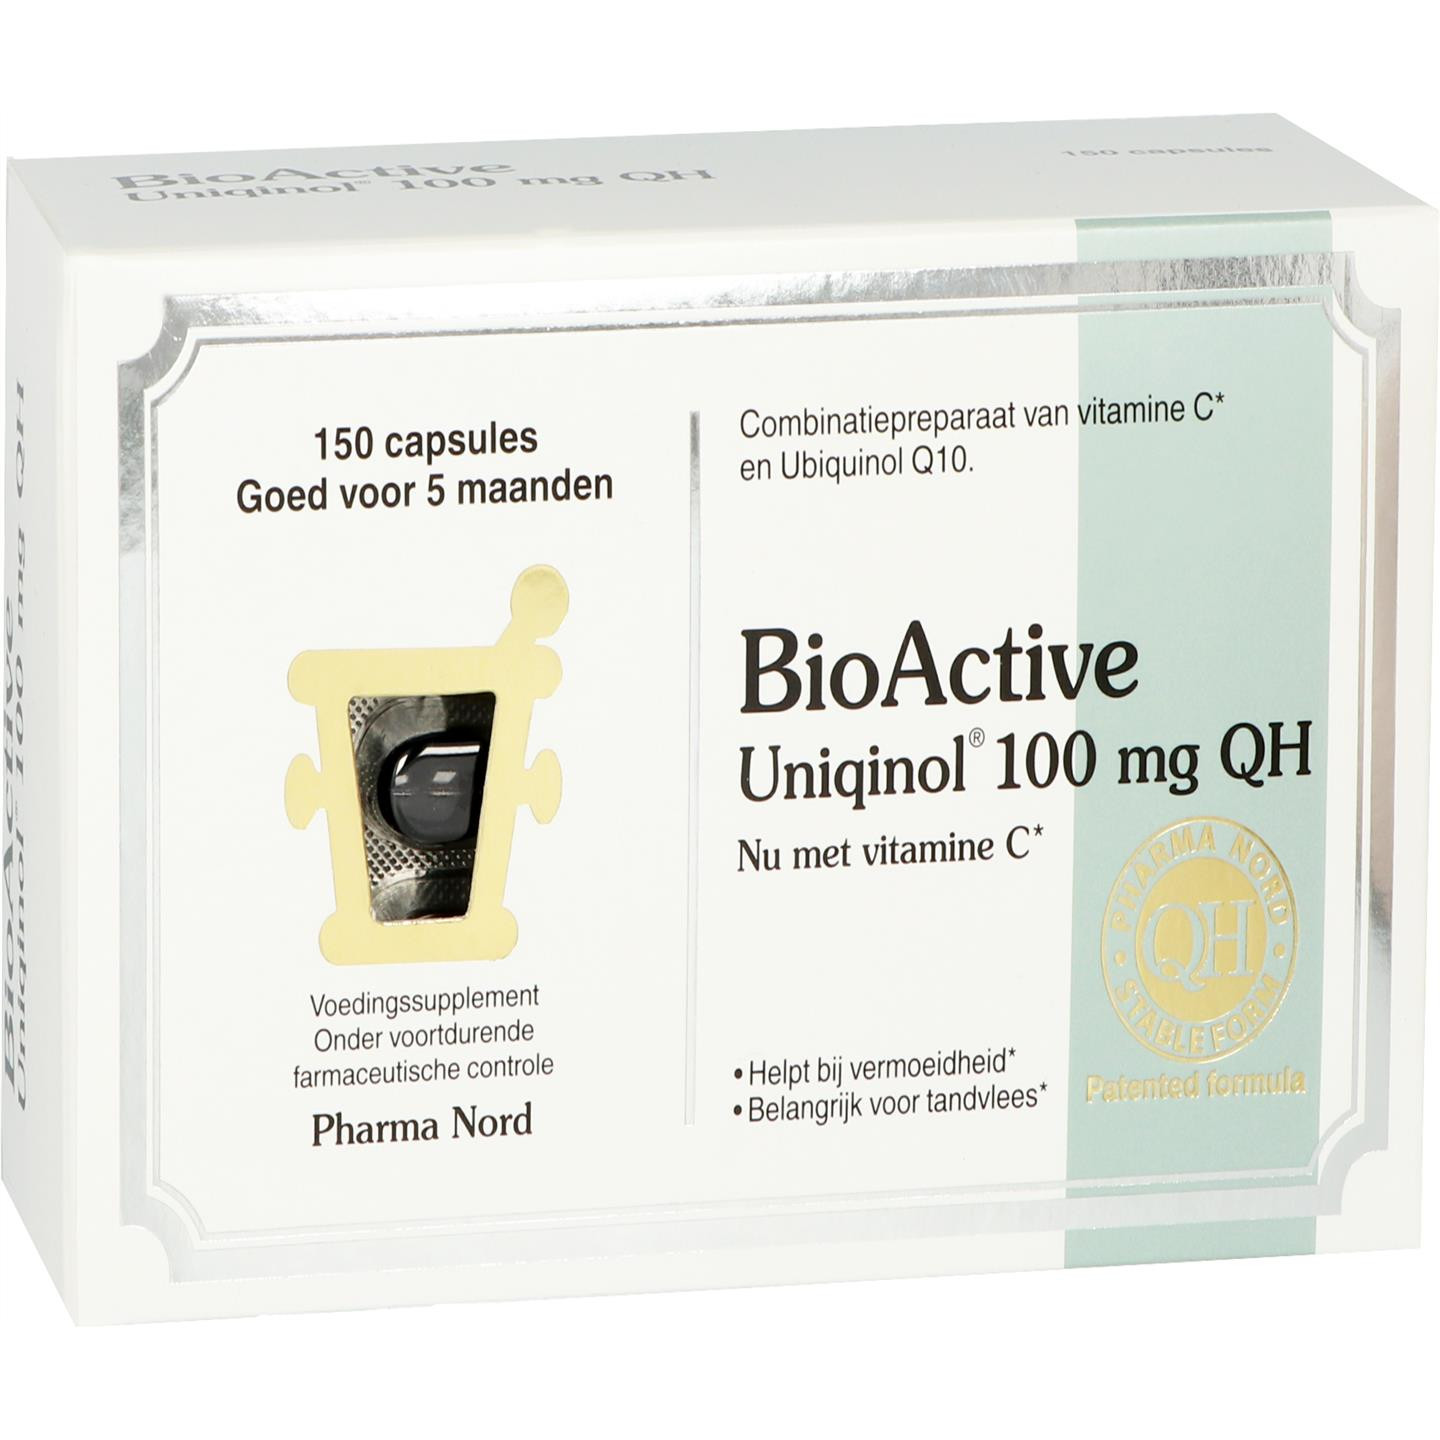 BioActive Uniqinol 100 mg QH